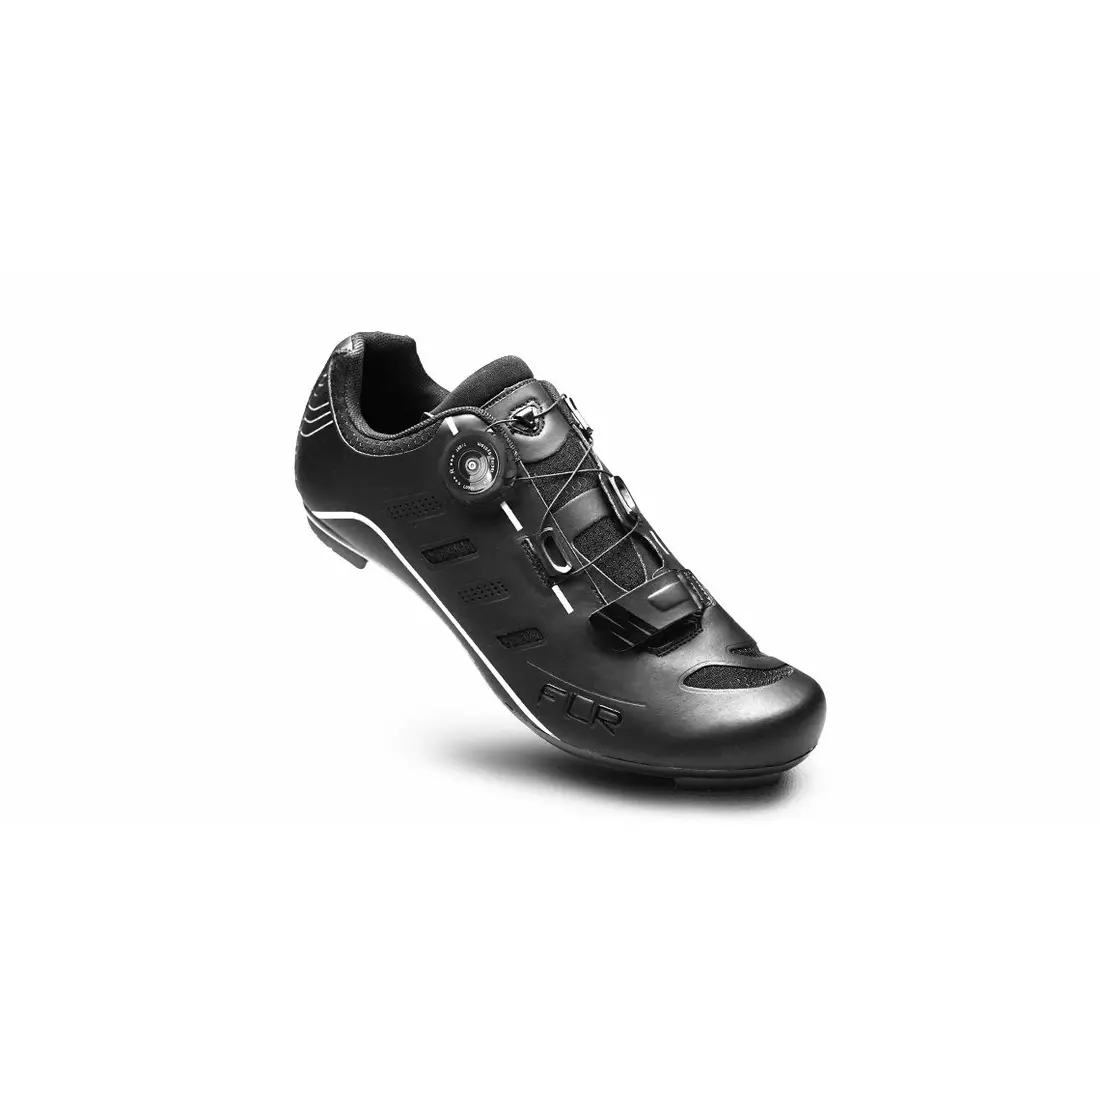 FLR F-22 road cycling shoes, black